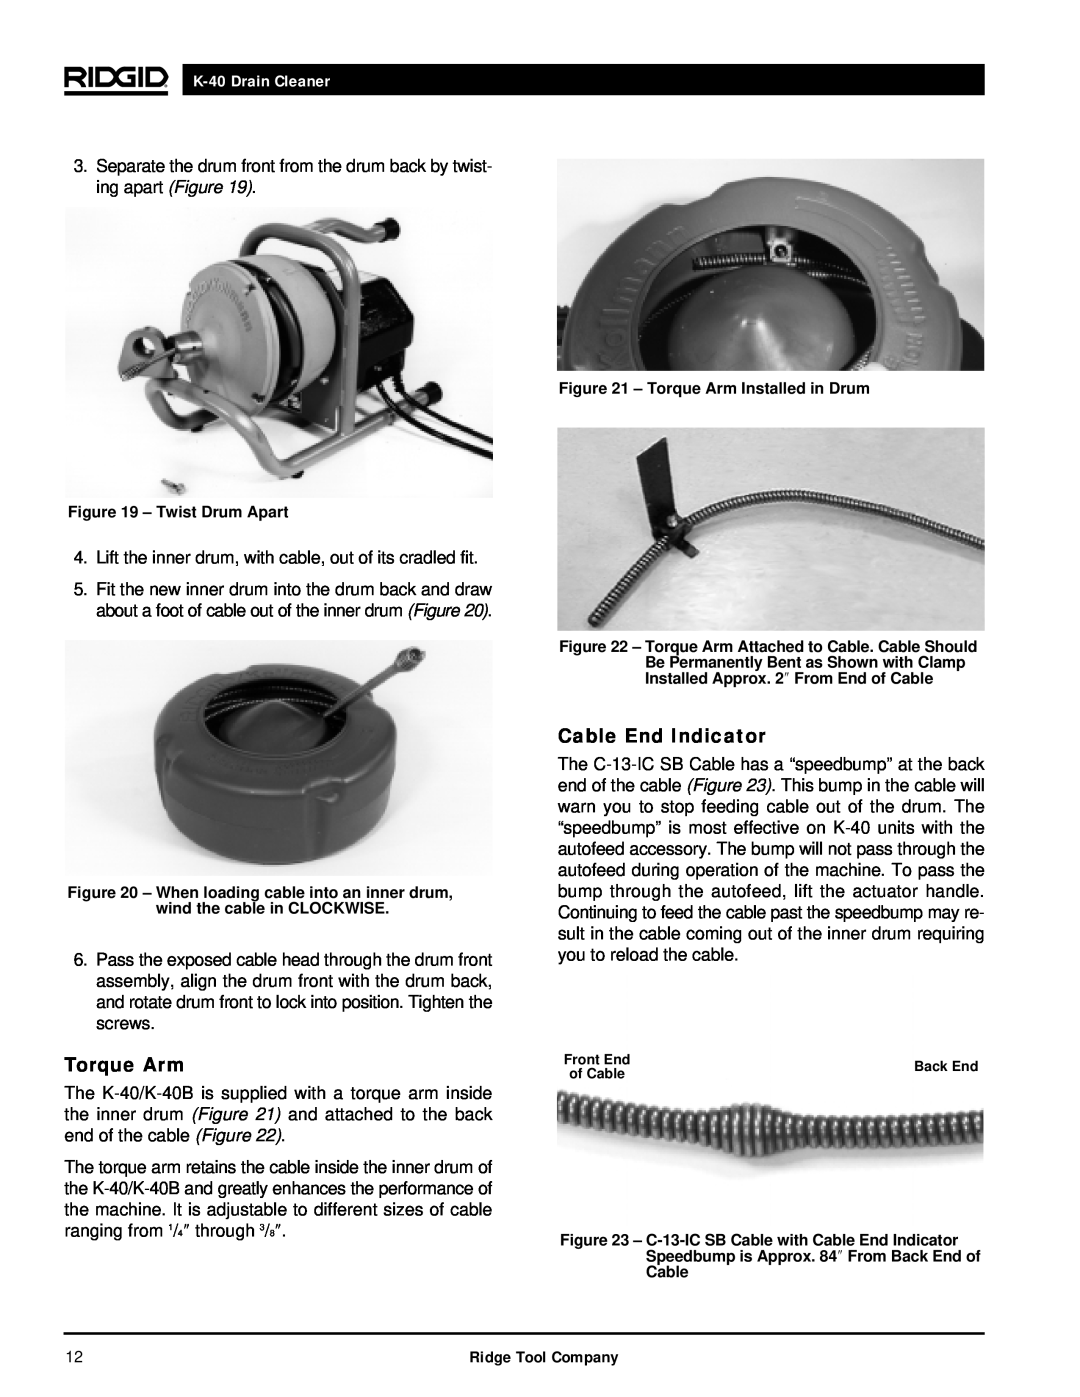 RIDGID K-40G PF, K-40B manual Cable End Indicator, K-40Drain Cleaner, Twist Drum Apart, Torque Arm Installed in Drum 